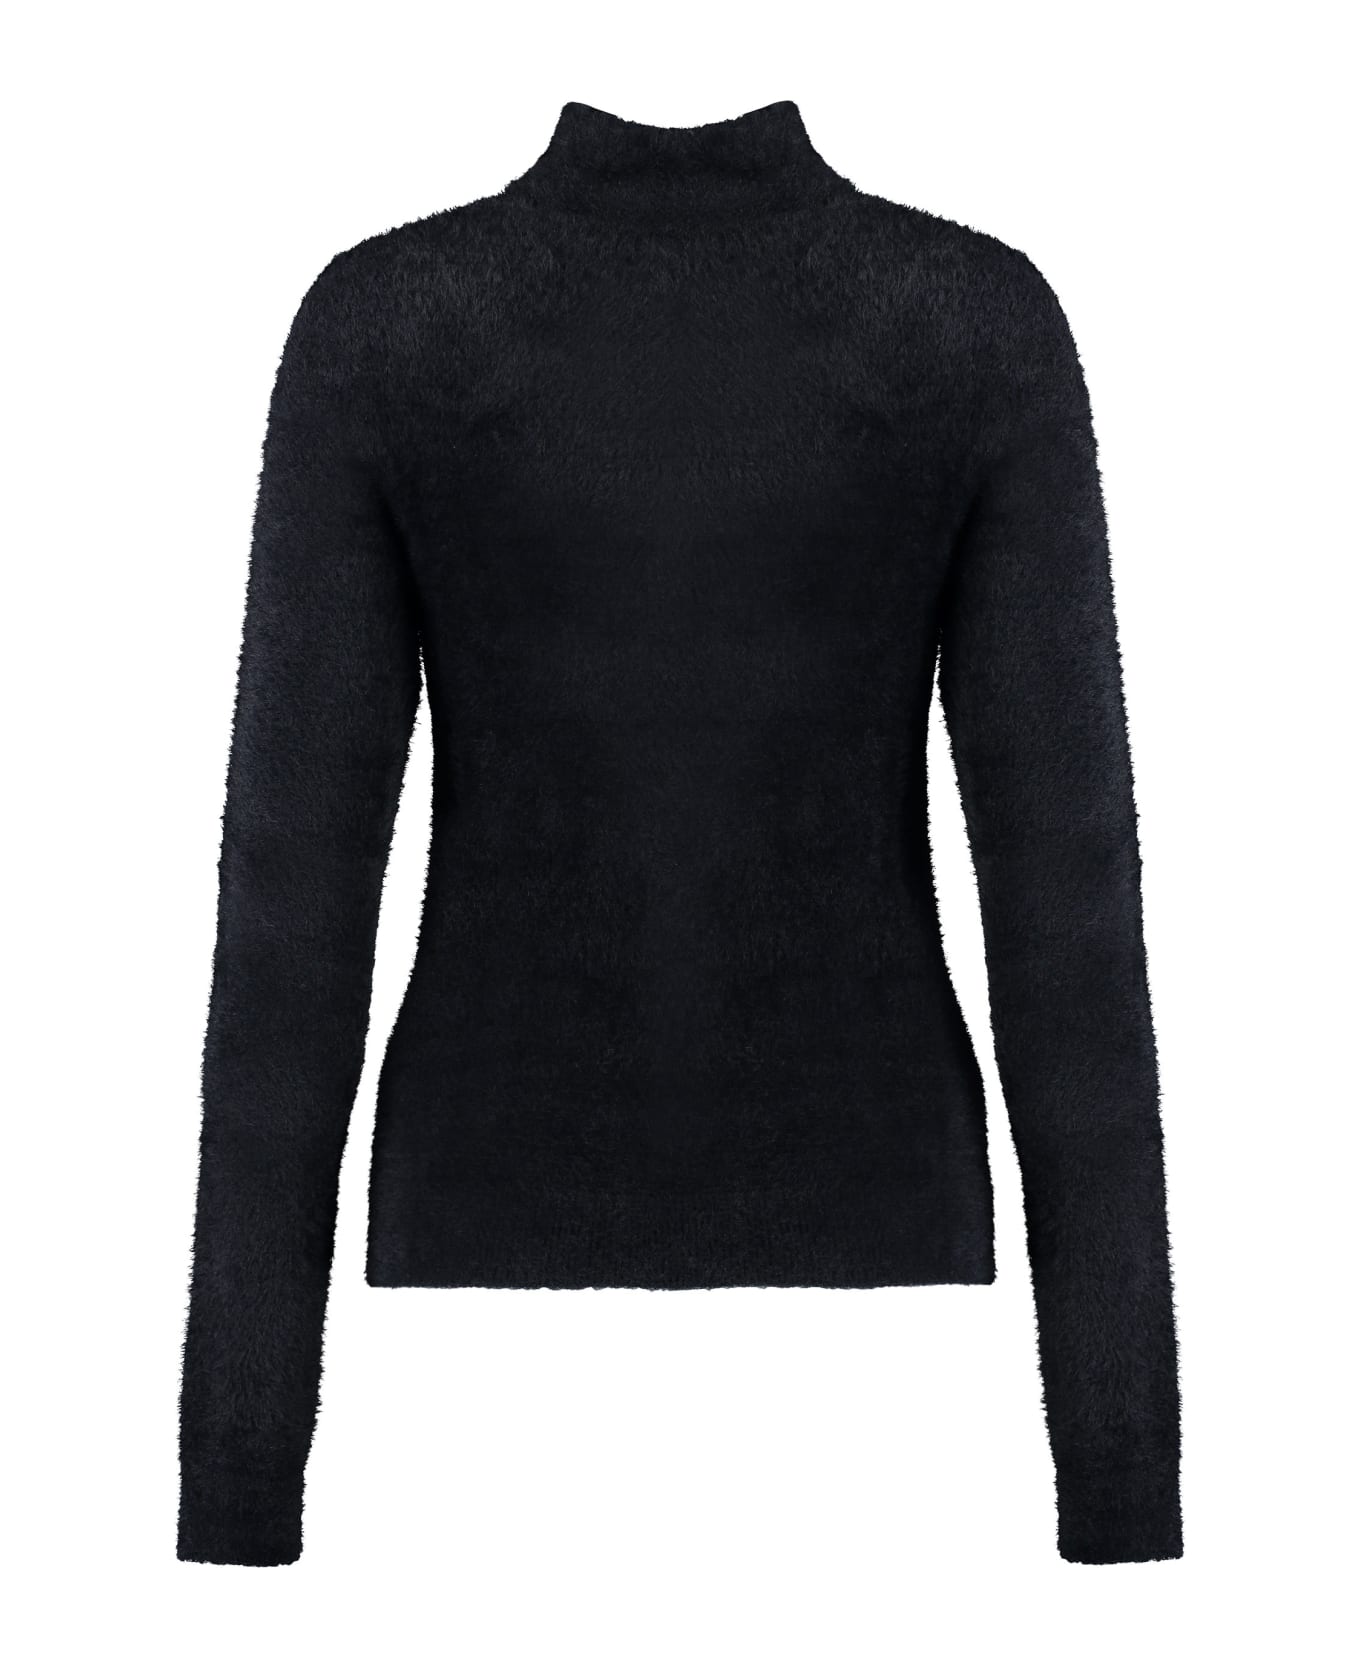 Marant Étoile Mayers Turtleneck Sweater - black ニットウェア